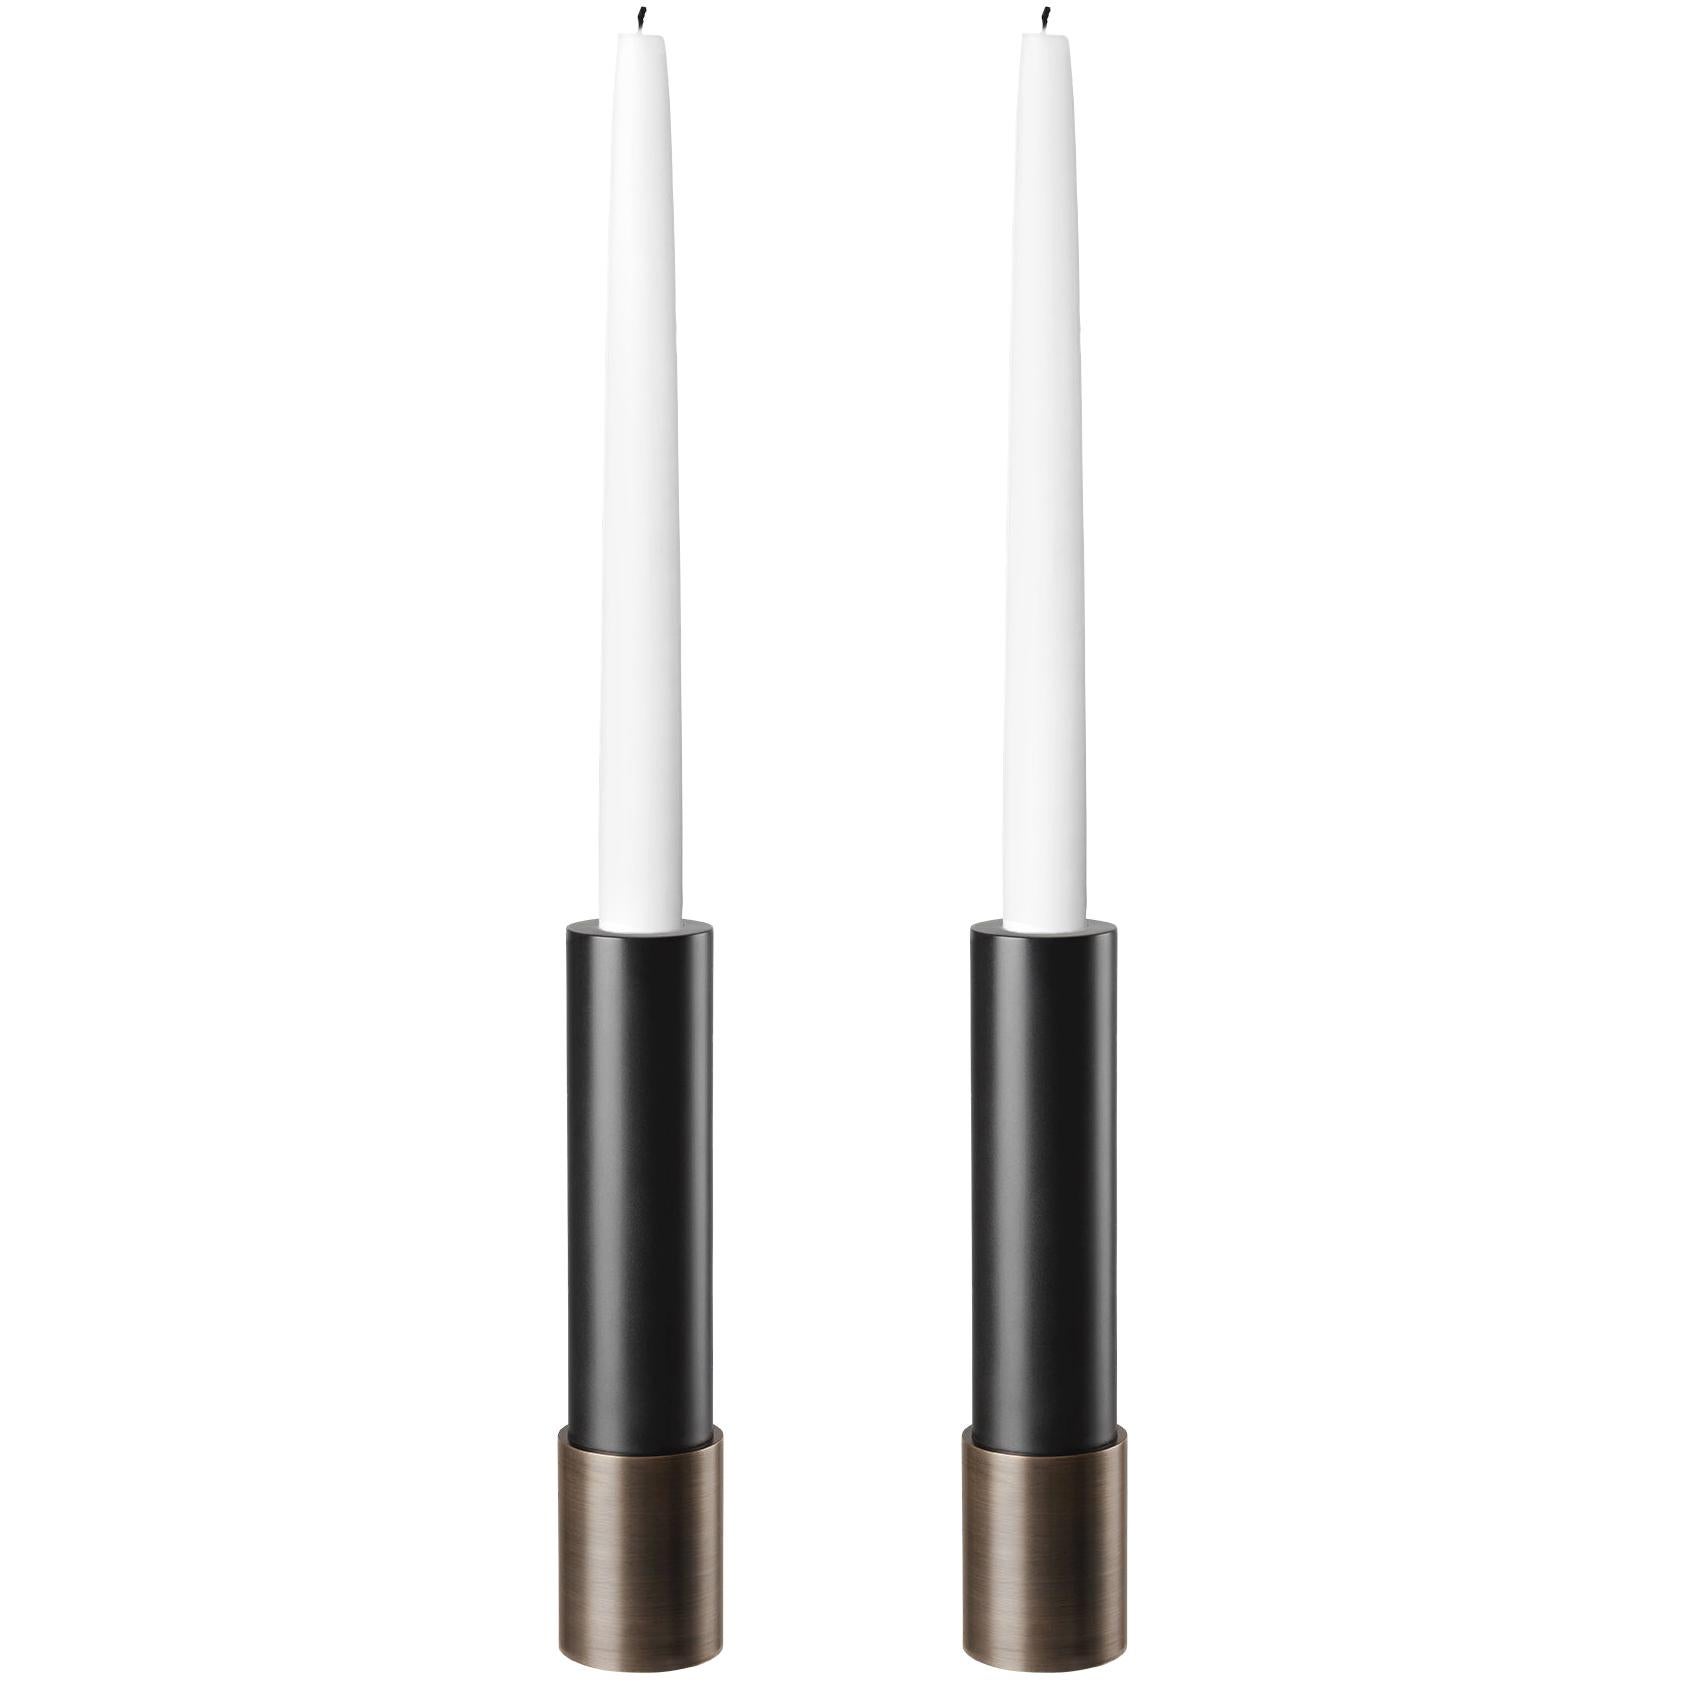 Pair of Candlesticks Model #20 by Space Copenhagen for GUBI For Sale